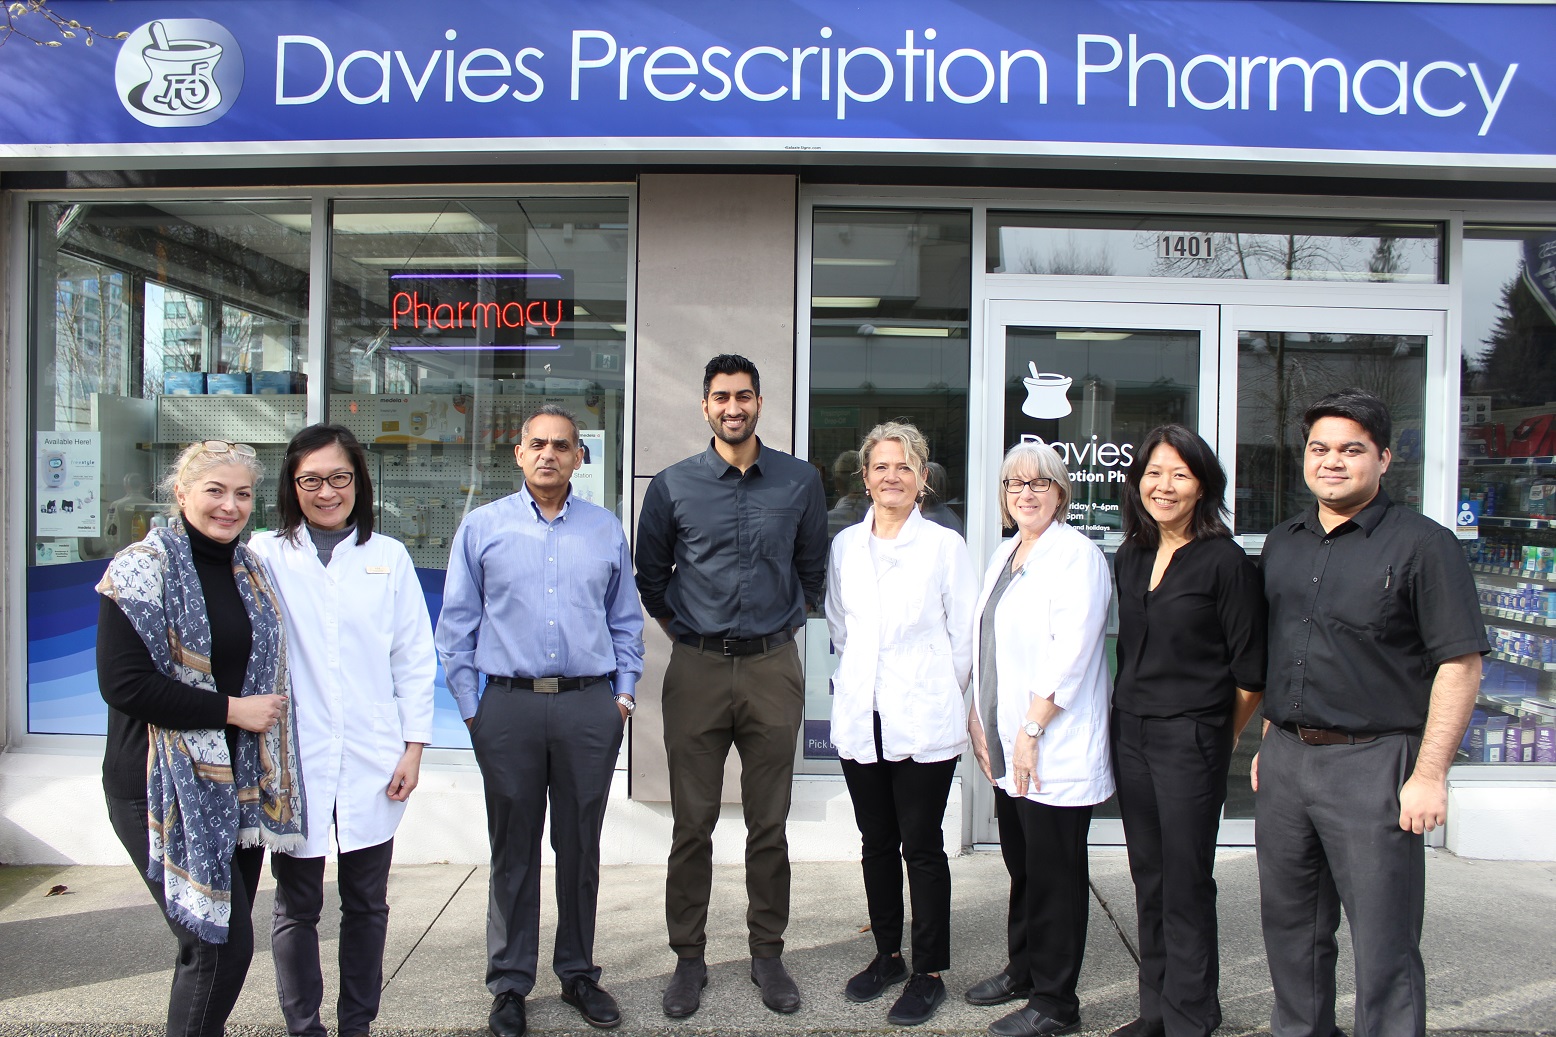 Davies Prescription Pharmacy